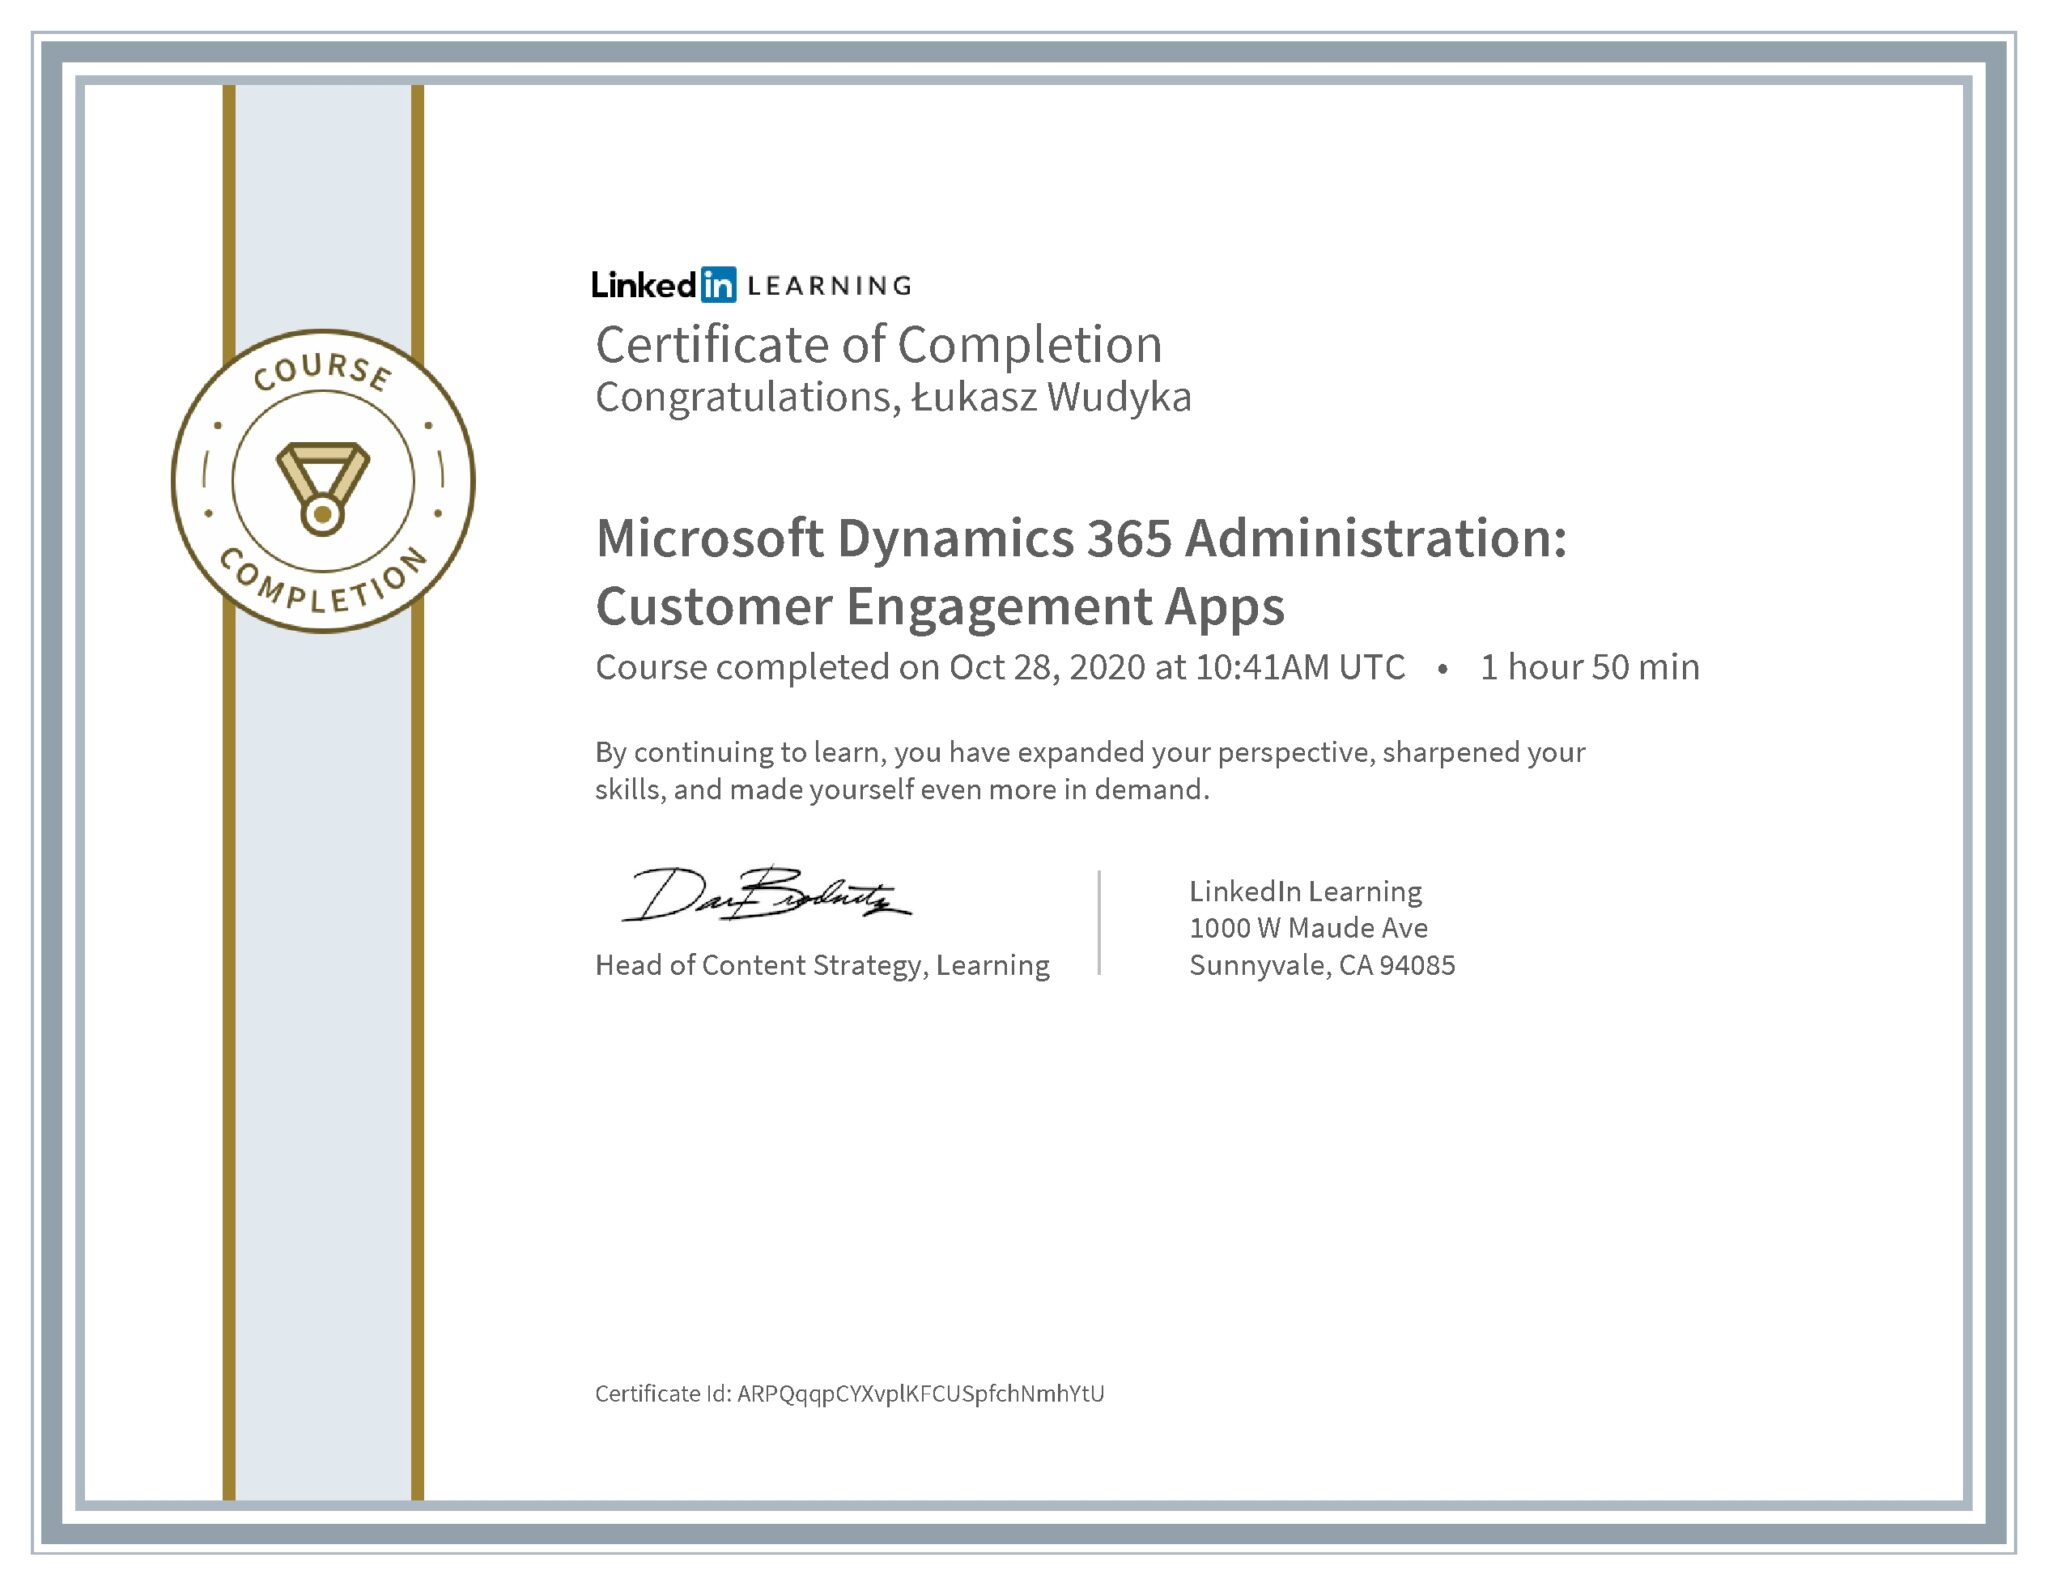 Łukasz Wudyka certyfikat LinkedIn Microsoft Dynamics 365 Administration: Customer Engagement Apps